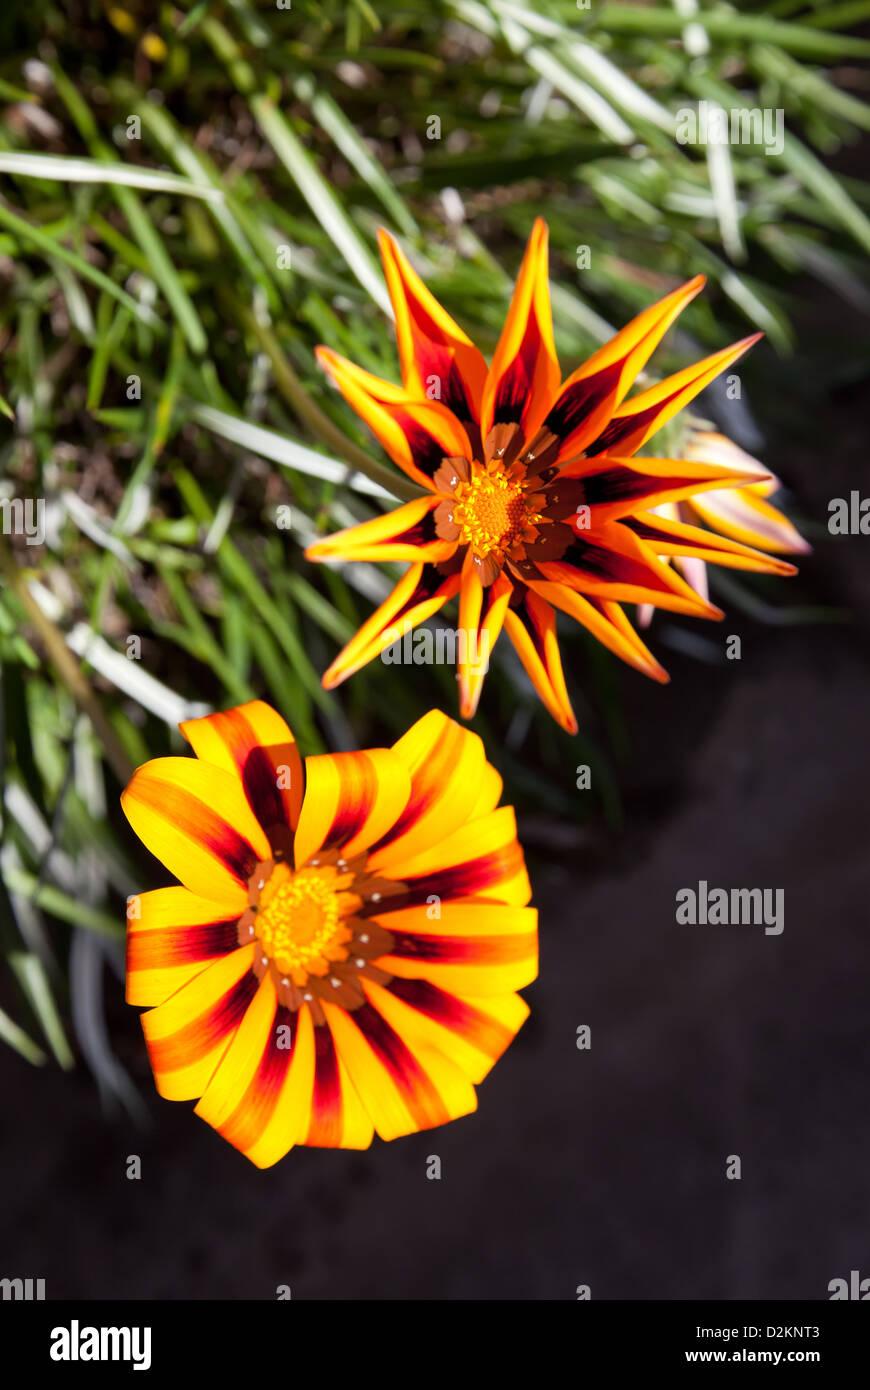 Gazarnia flowers Stock Photo